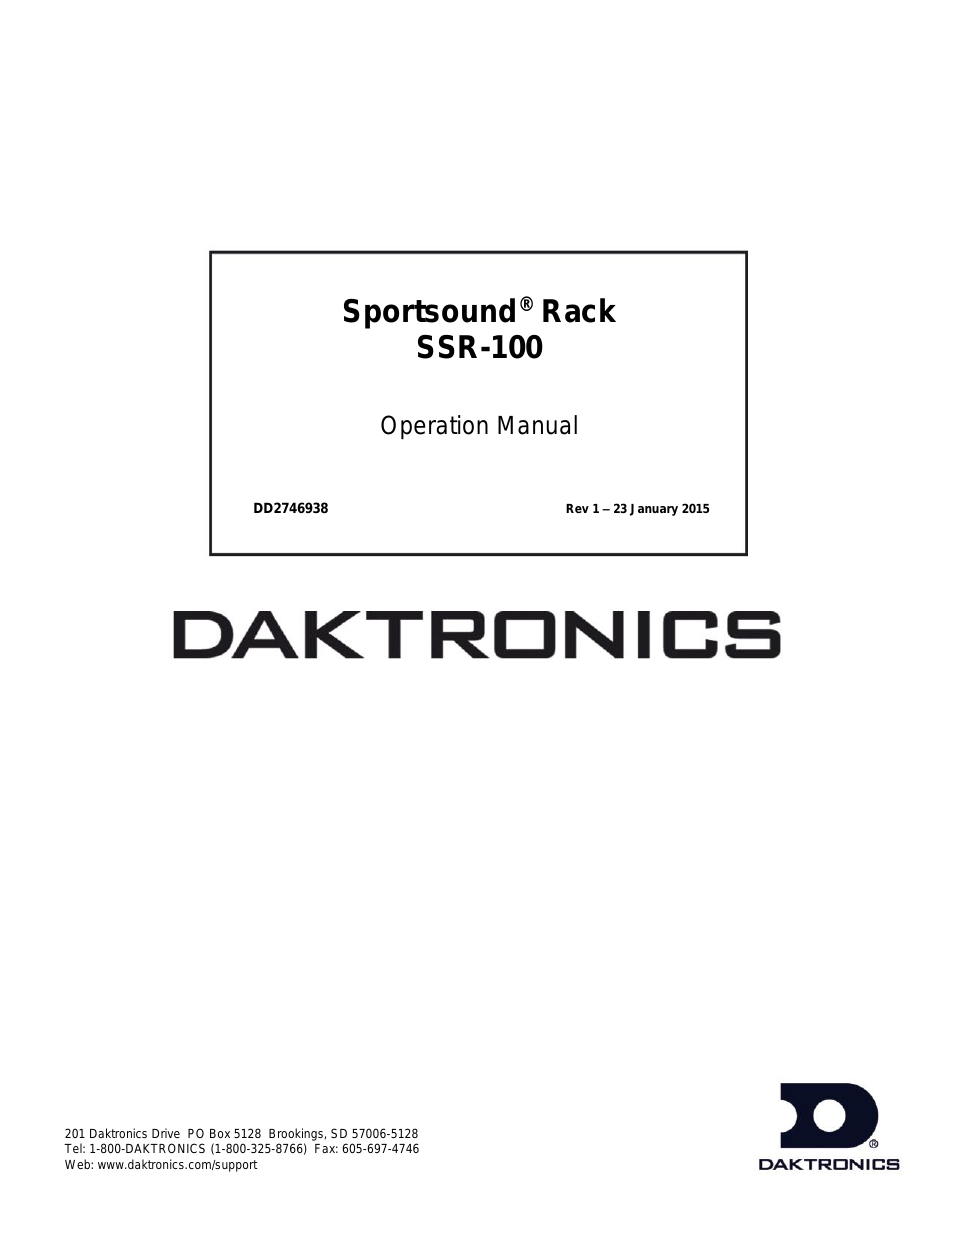 Sportsound Rack SSR-100 Operation Manual